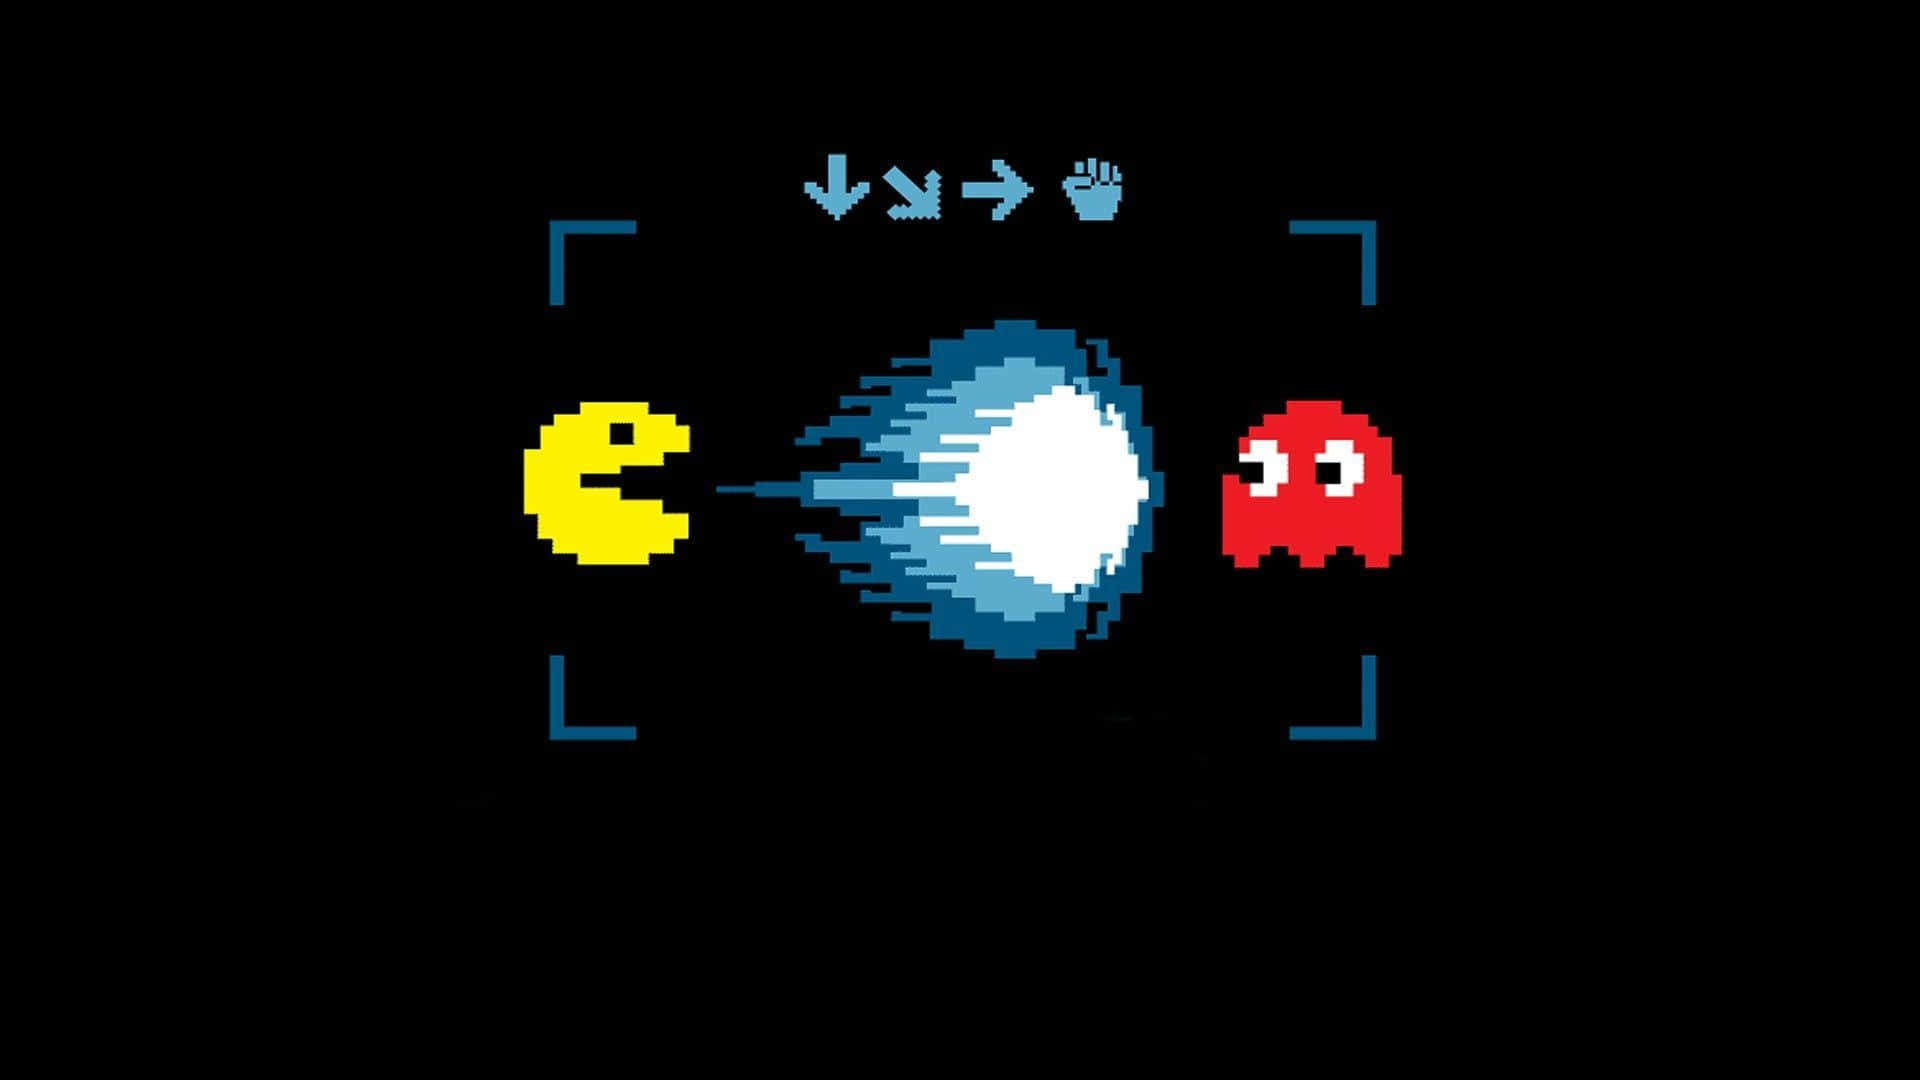 Classic Pacman Gameplay